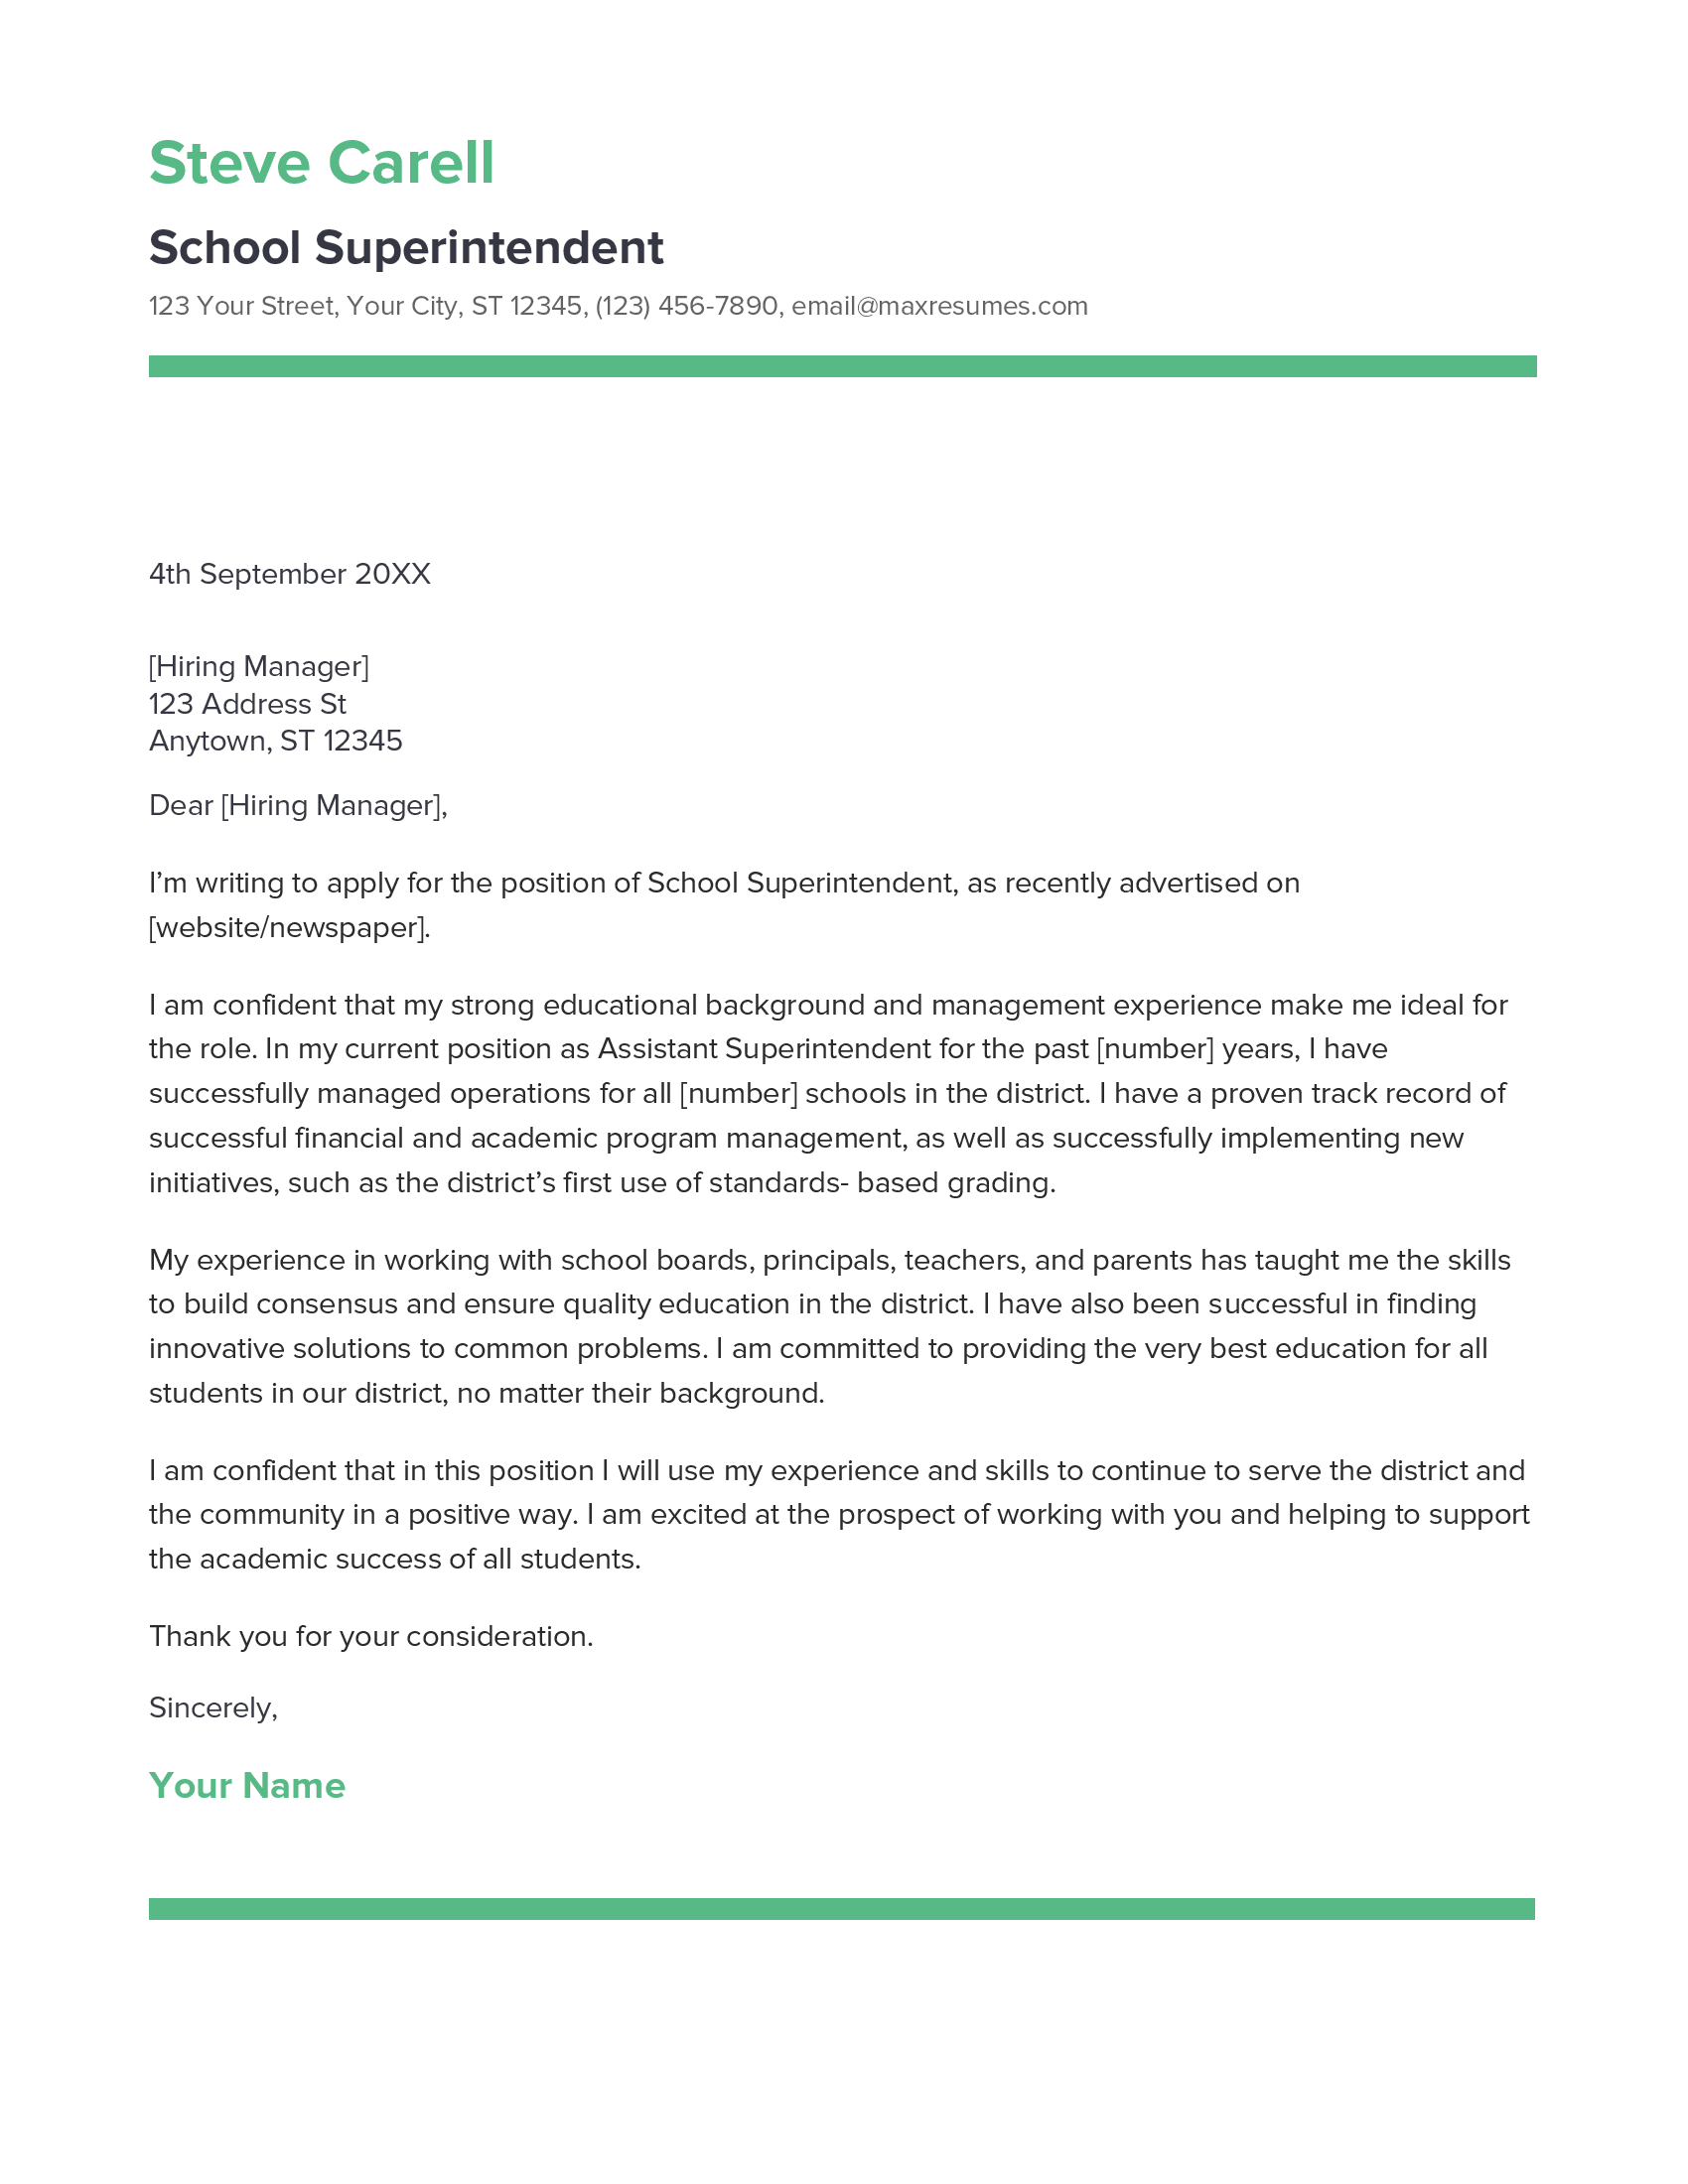 application letter for a school president